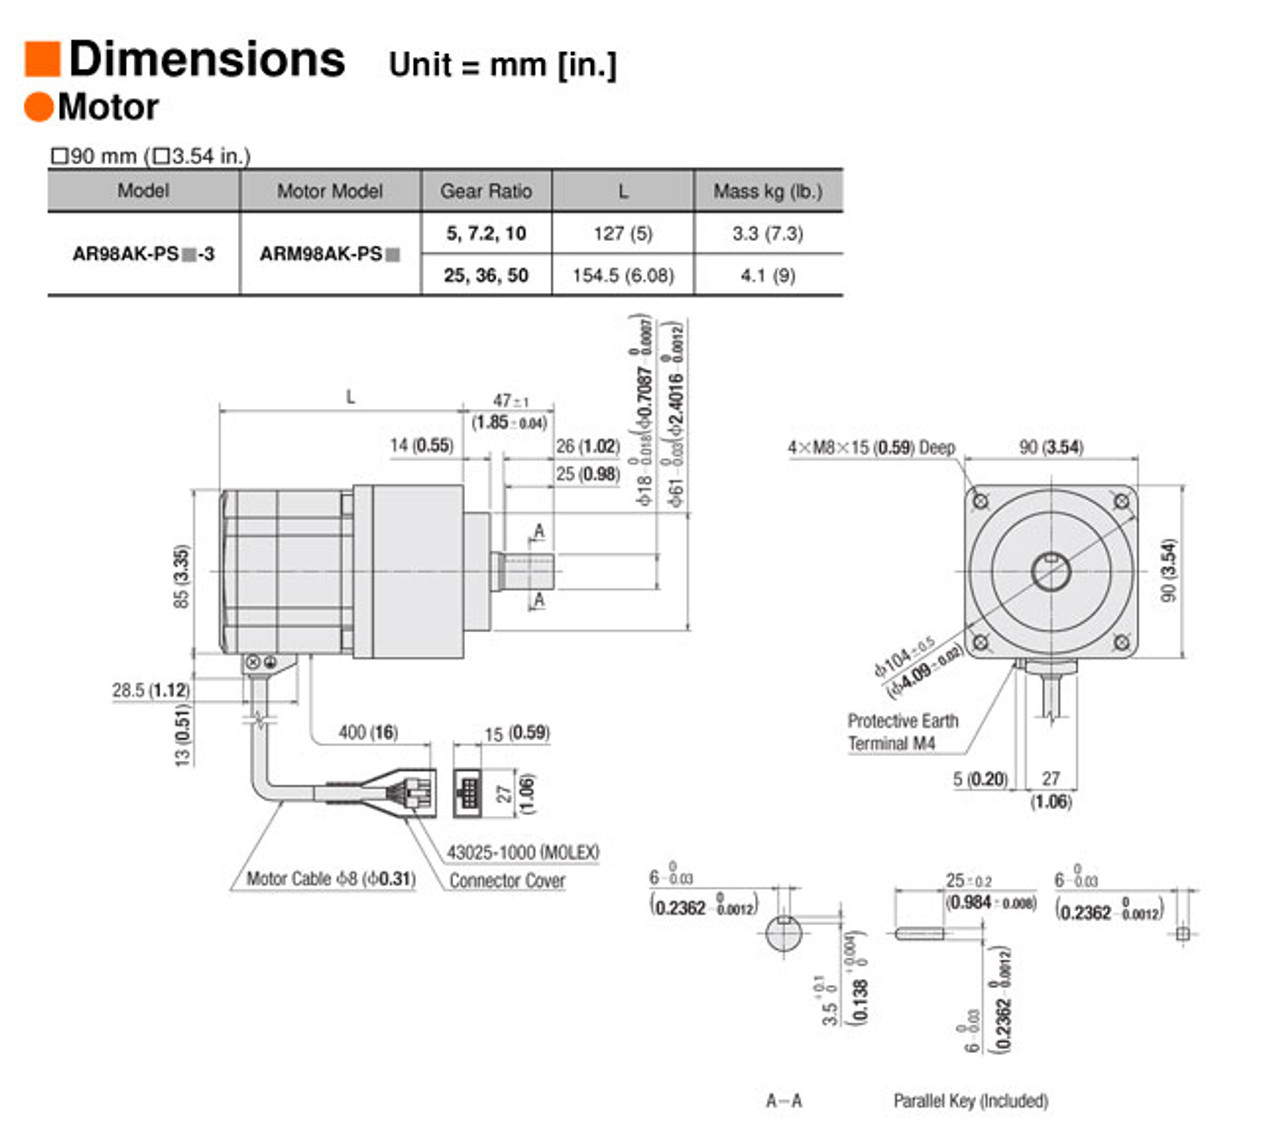 AR98AK-PS5-3 - Dimensions